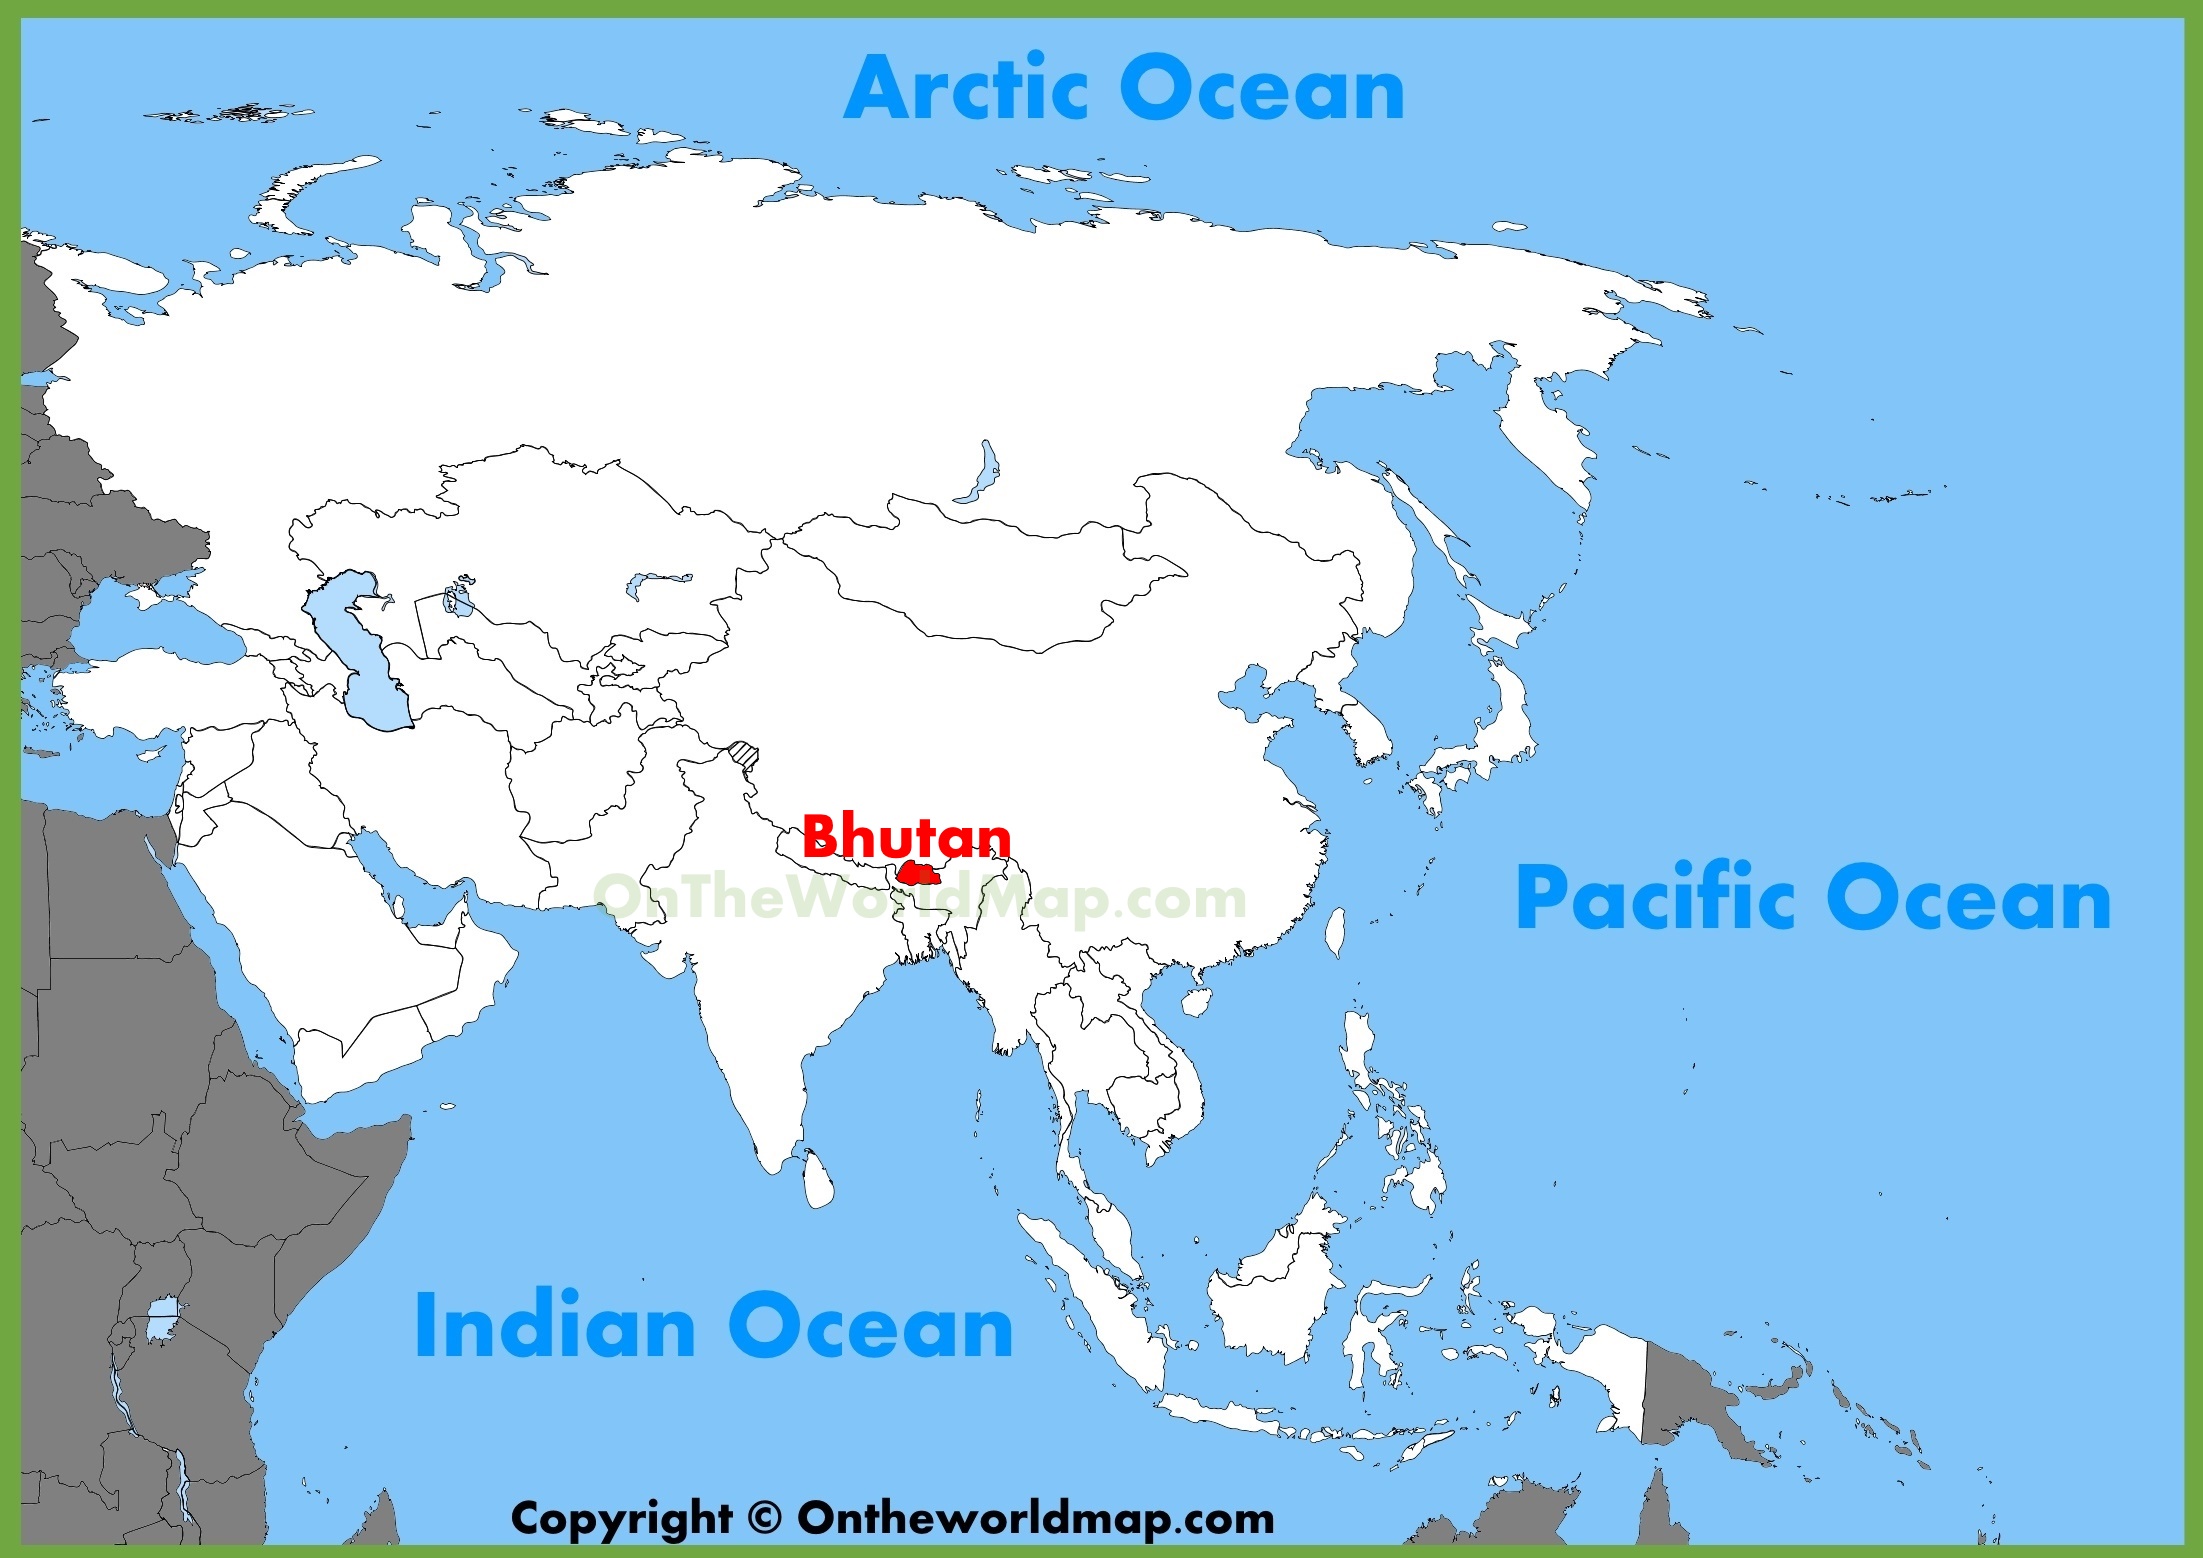 bhutan-location-on-the-asia-map.jpg